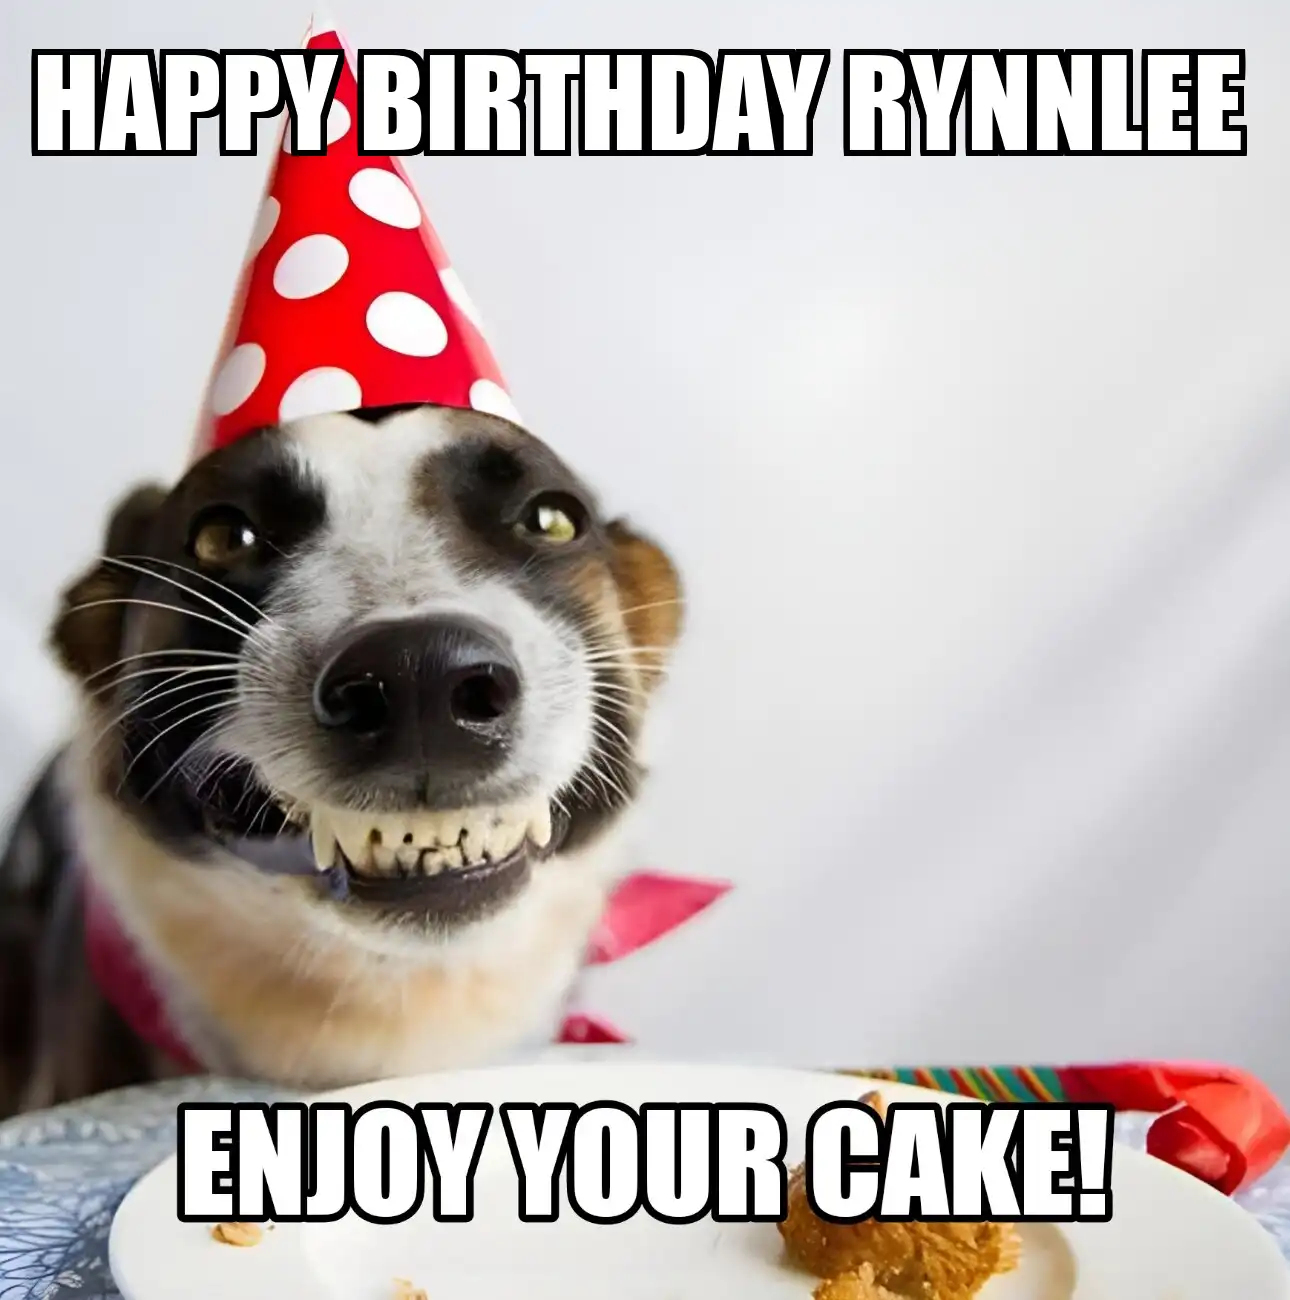 Happy Birthday Rynnlee Enjoy Your Cake Dog Meme